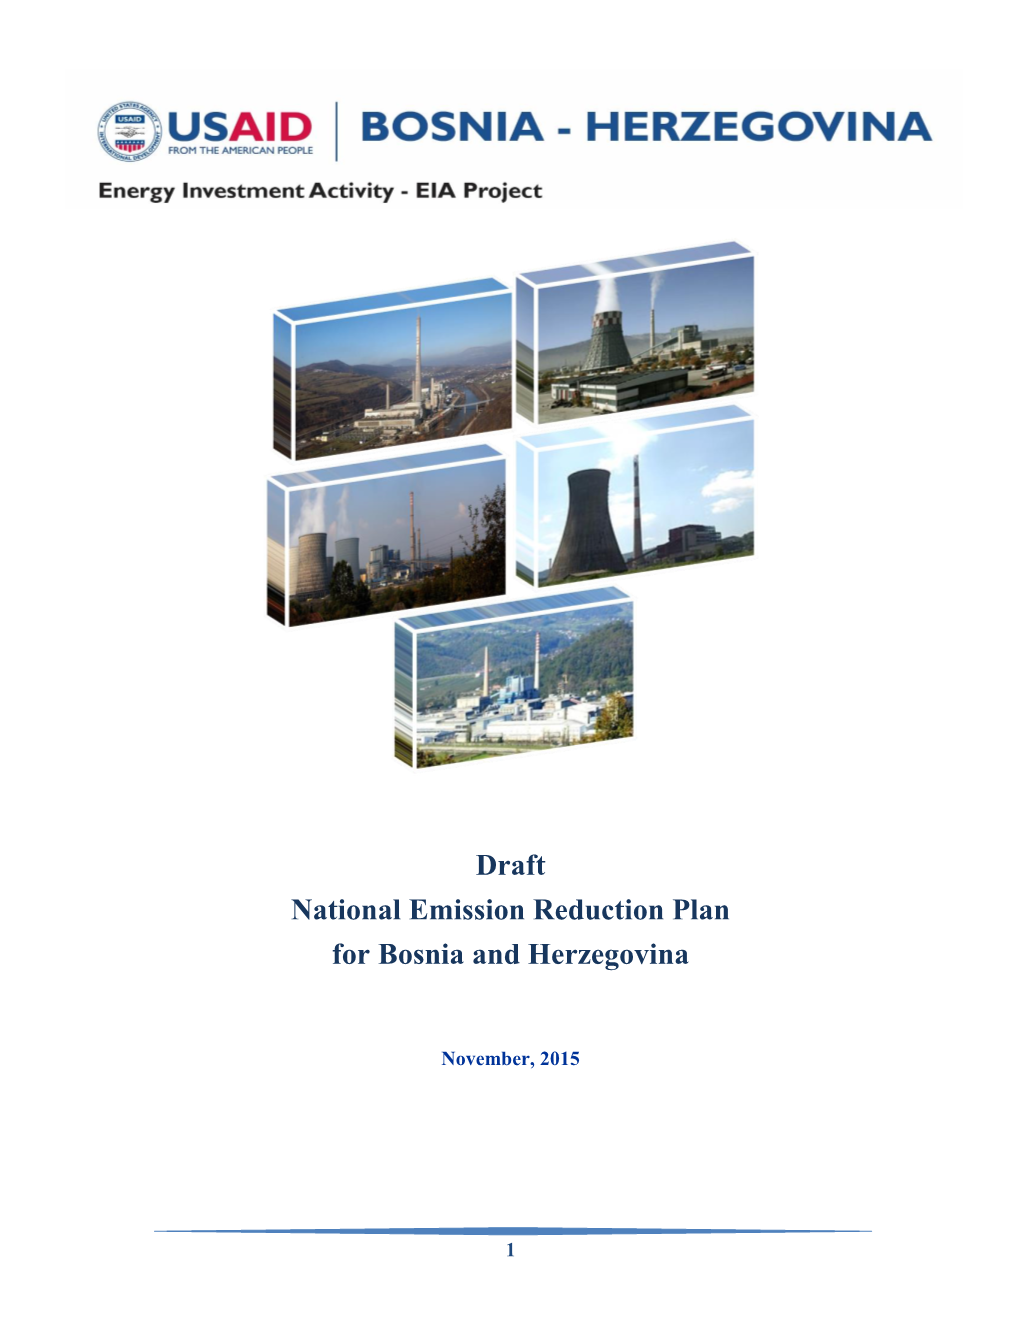 Draft National Emission Reduction Plan for Bosnia and Herzegovina